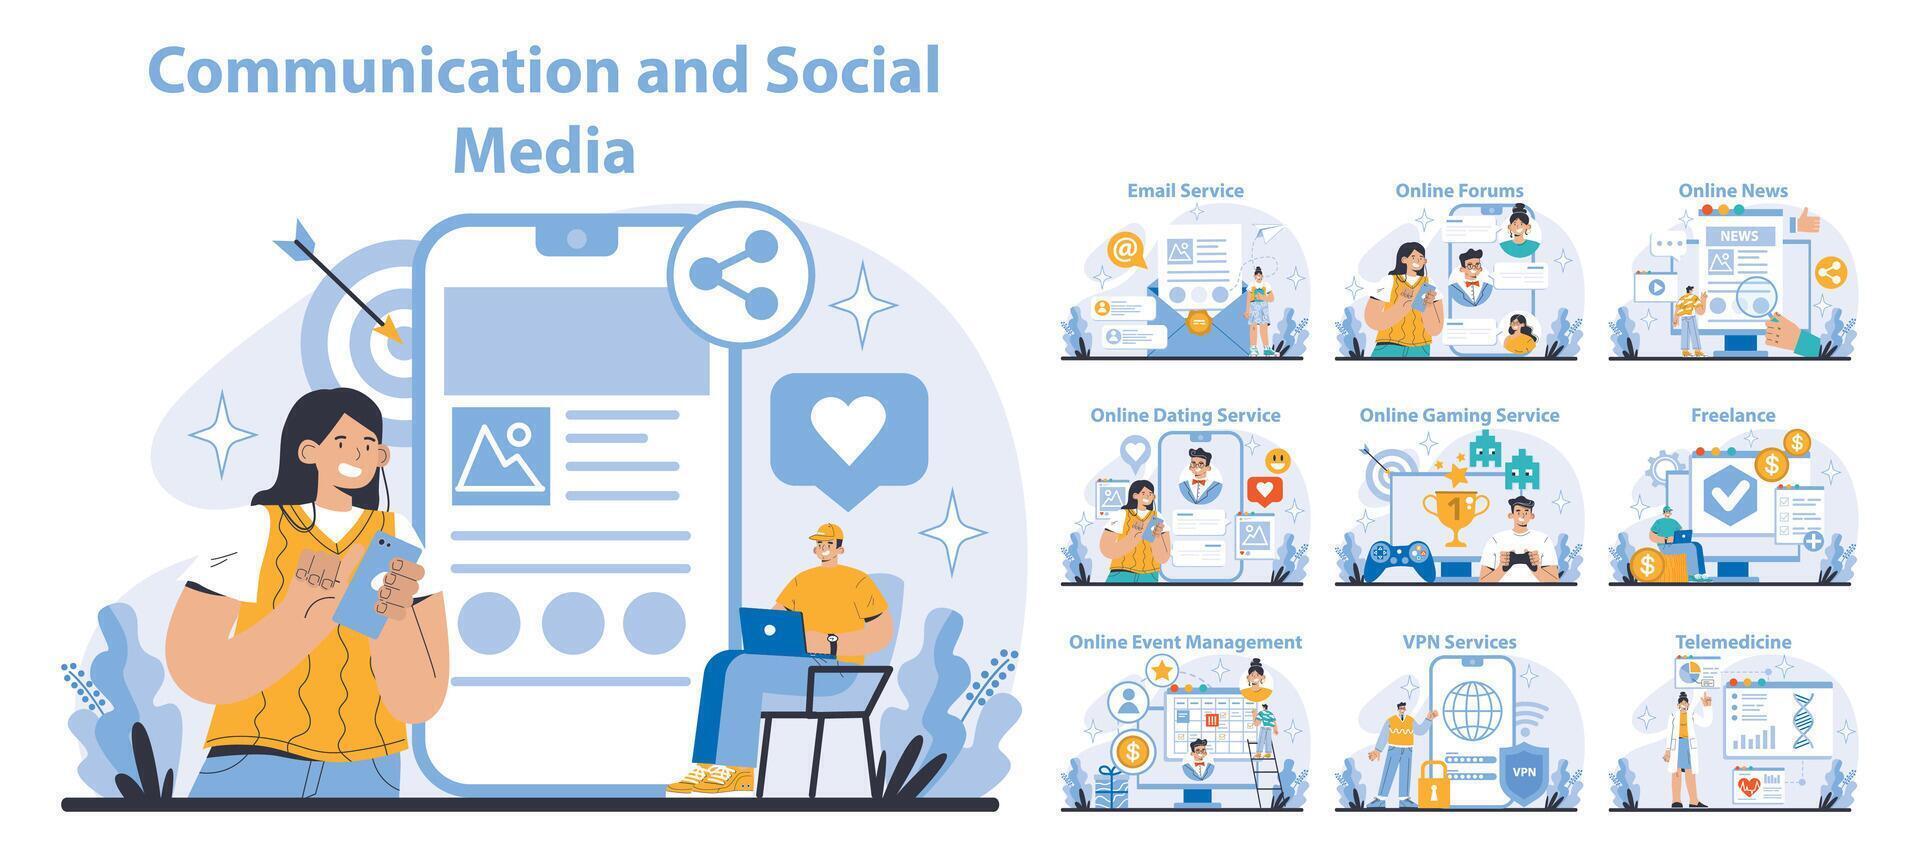 comunicación y social medios de comunicación concepto. plano vector ilustración